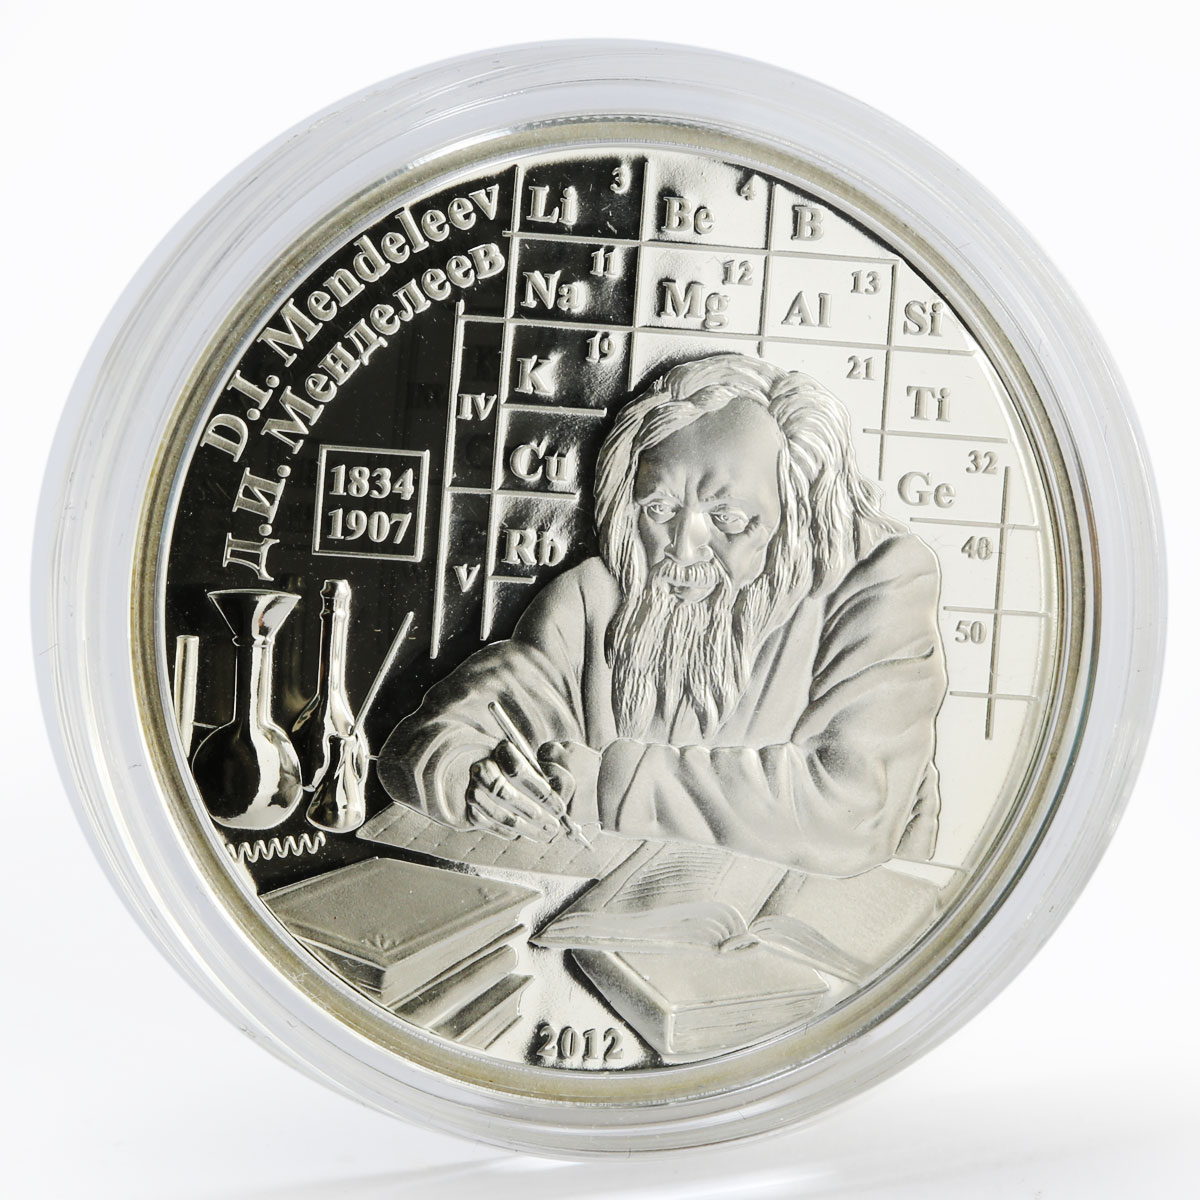 Cook Island 5 dollars Dmitri Mendeleev сhemistry physics proof silver coin 2012